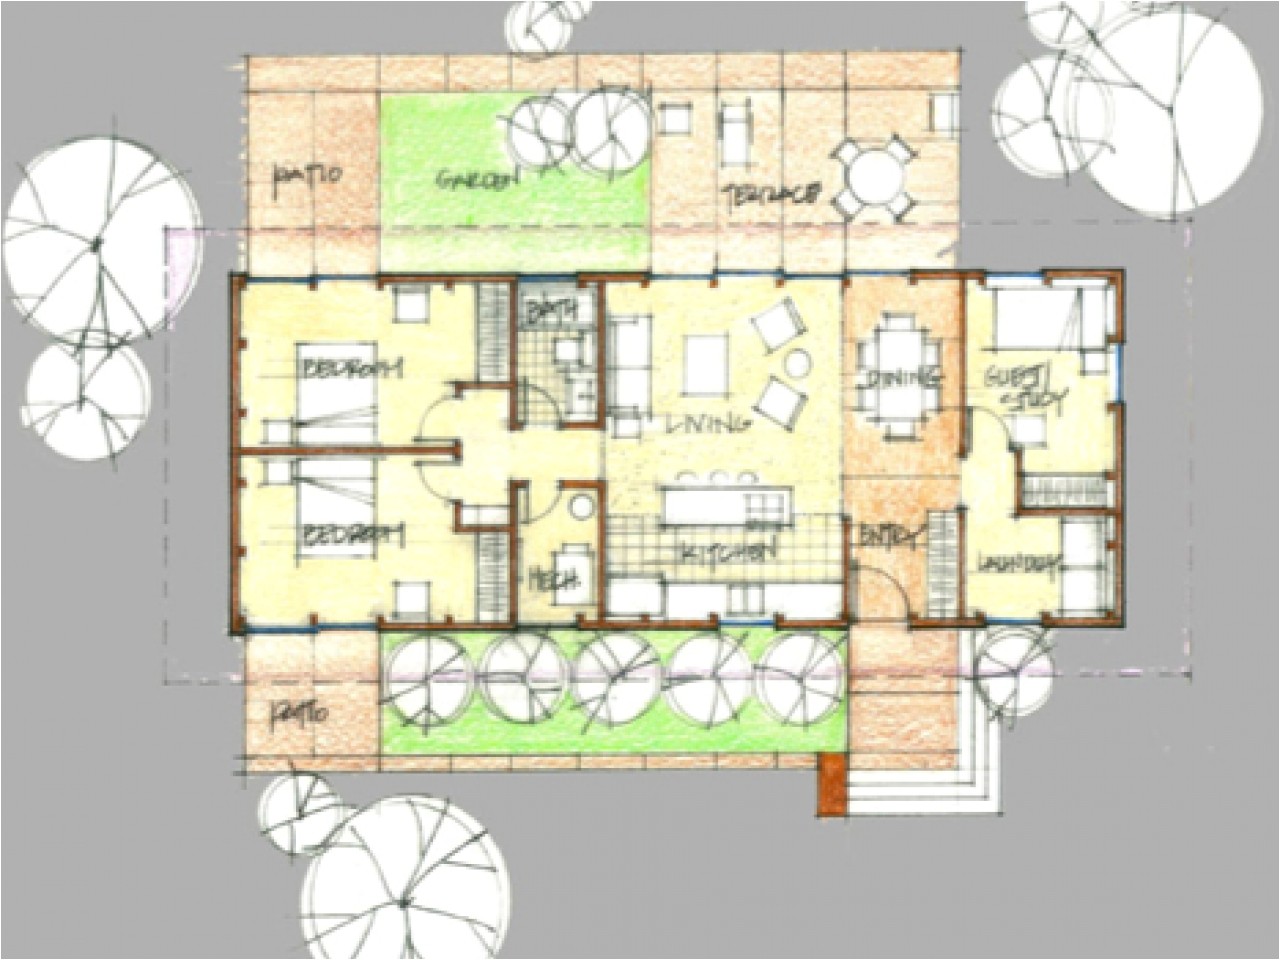 Mid Century Modern Home Design Plans Mid Century Modern House Plans